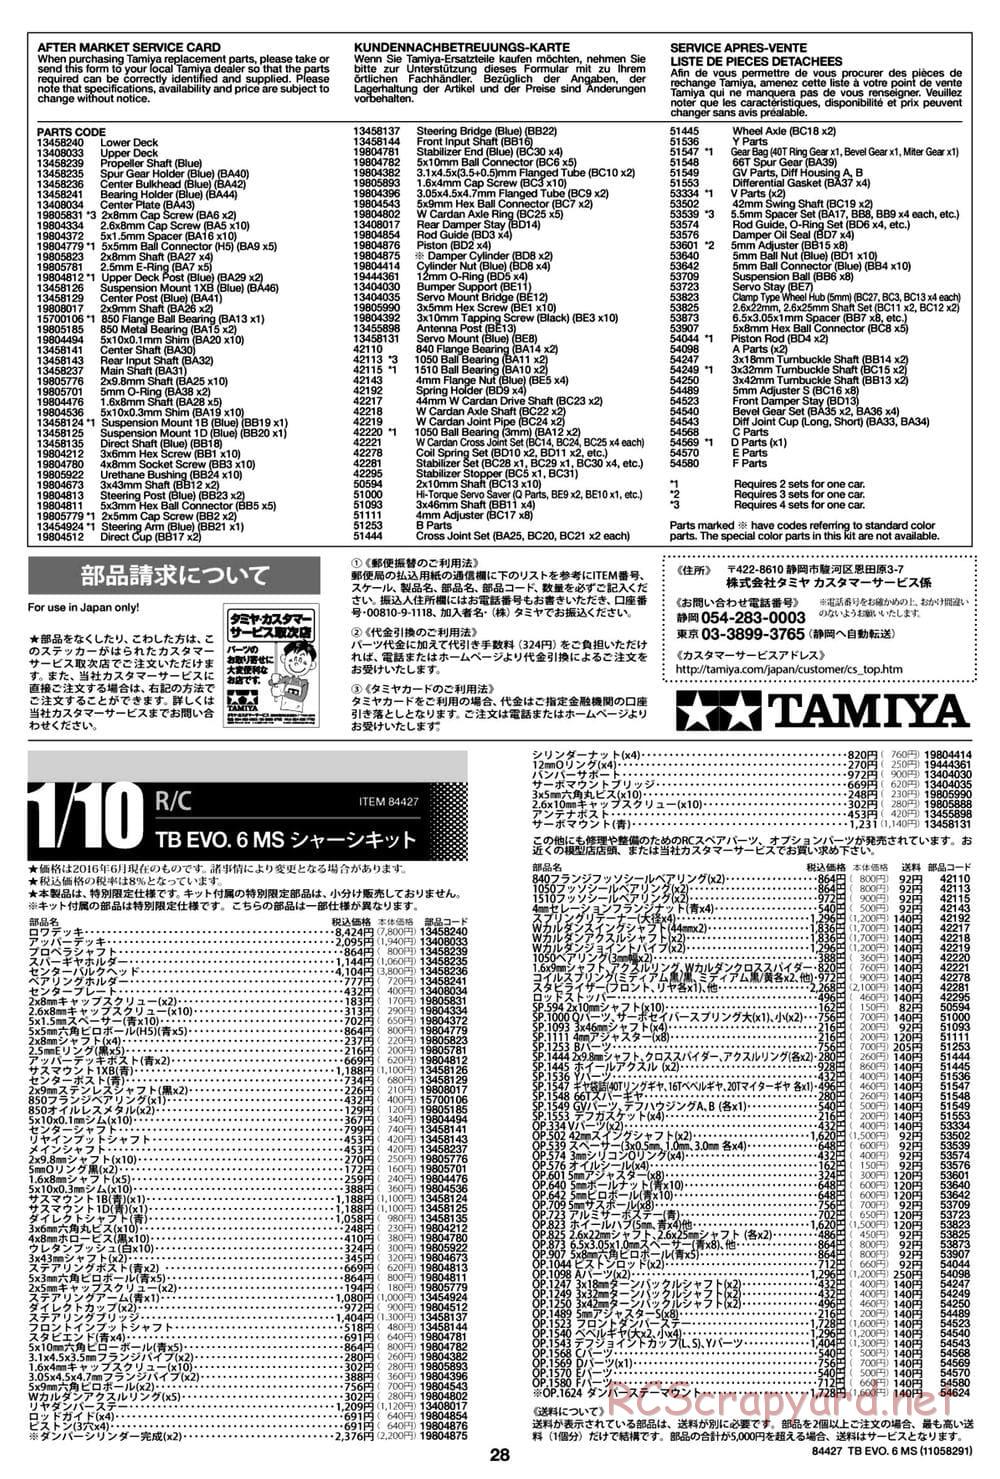 Tamiya - TB Evo.6 MS Chassis - Manual - Page 28